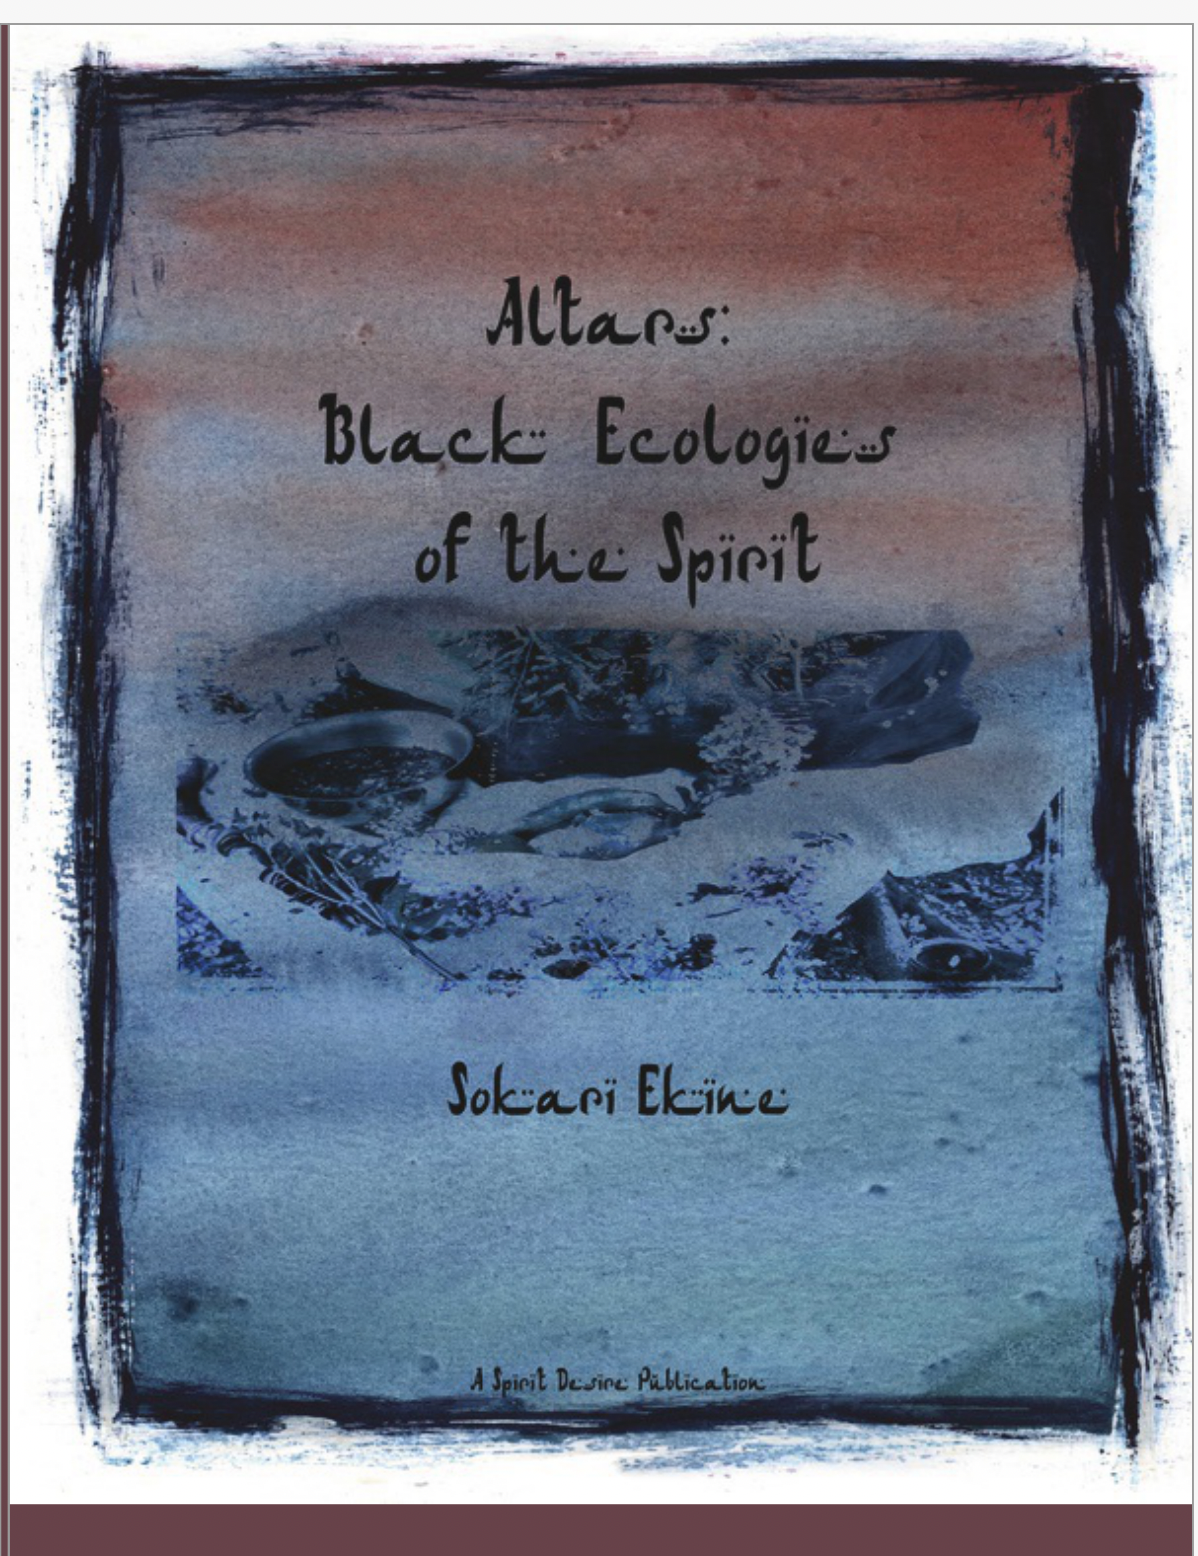 Photo book - Altars: Black Ecologies of the Spirit